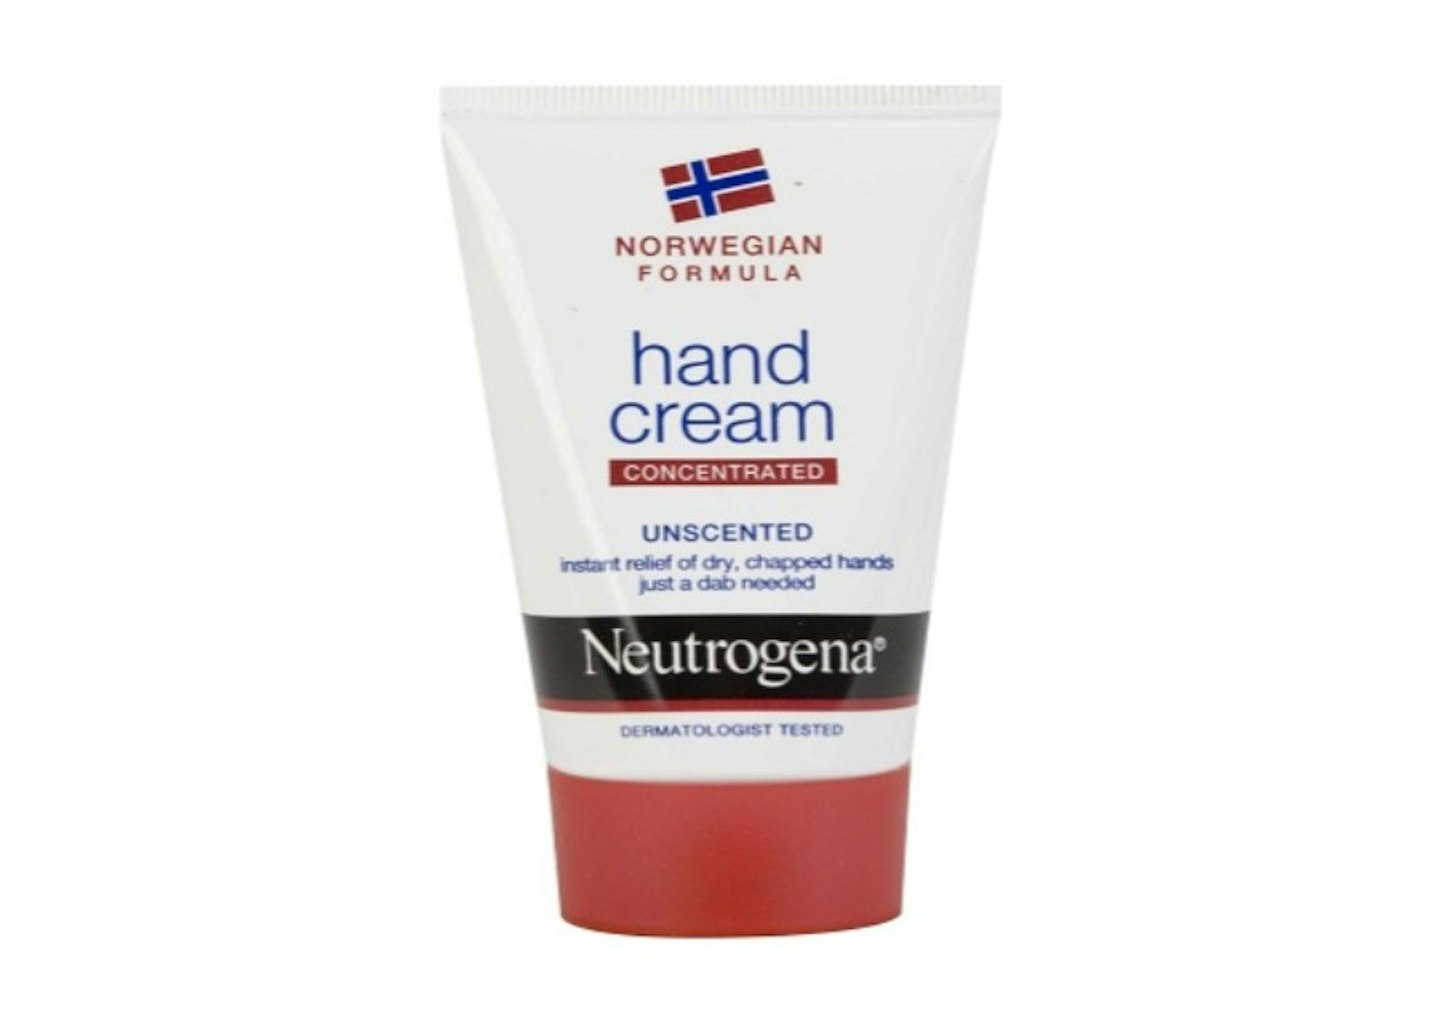 Neutrogena Norwegian Formula Hand Cream (3 pack)